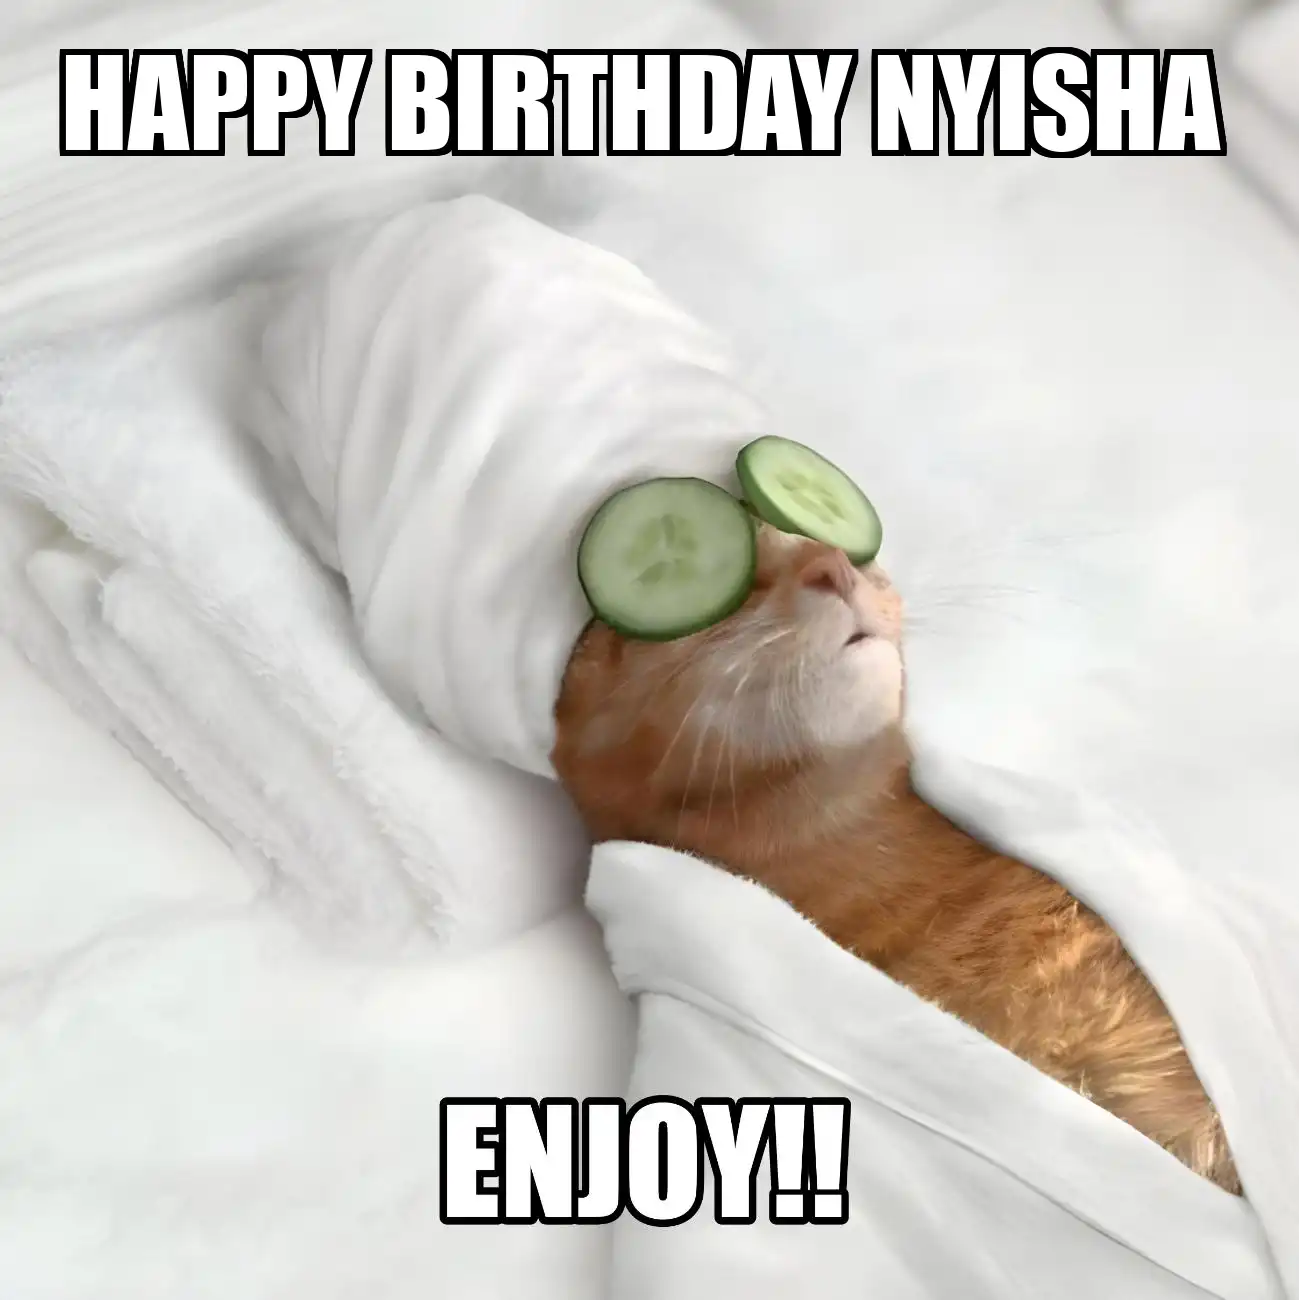 Happy Birthday Nyisha Enjoy Cat Meme